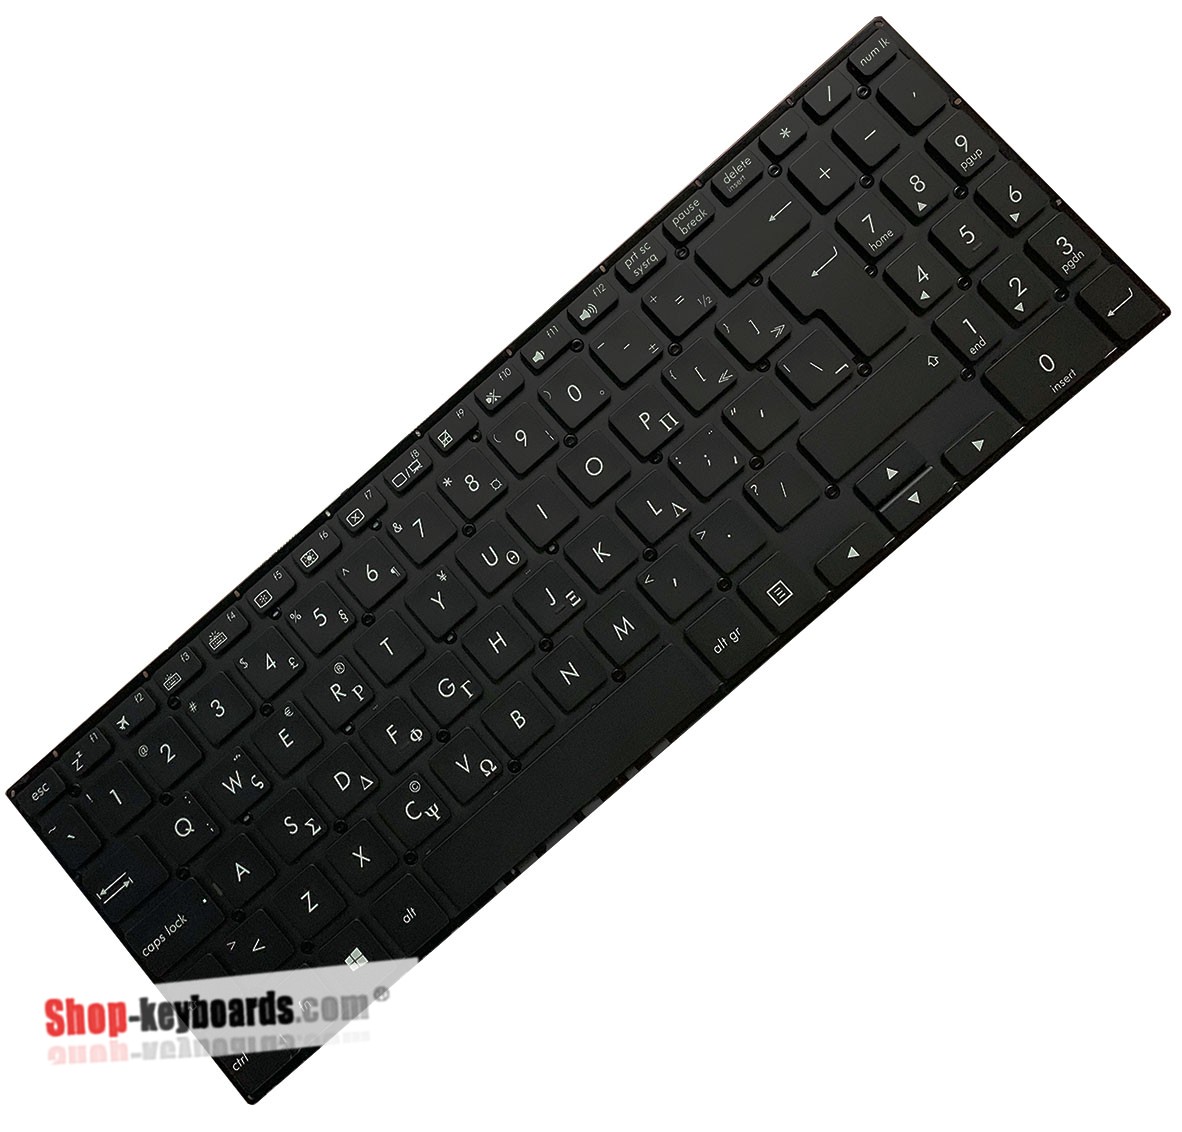 Asus 0KNB0-5630UK00 Keyboard replacement